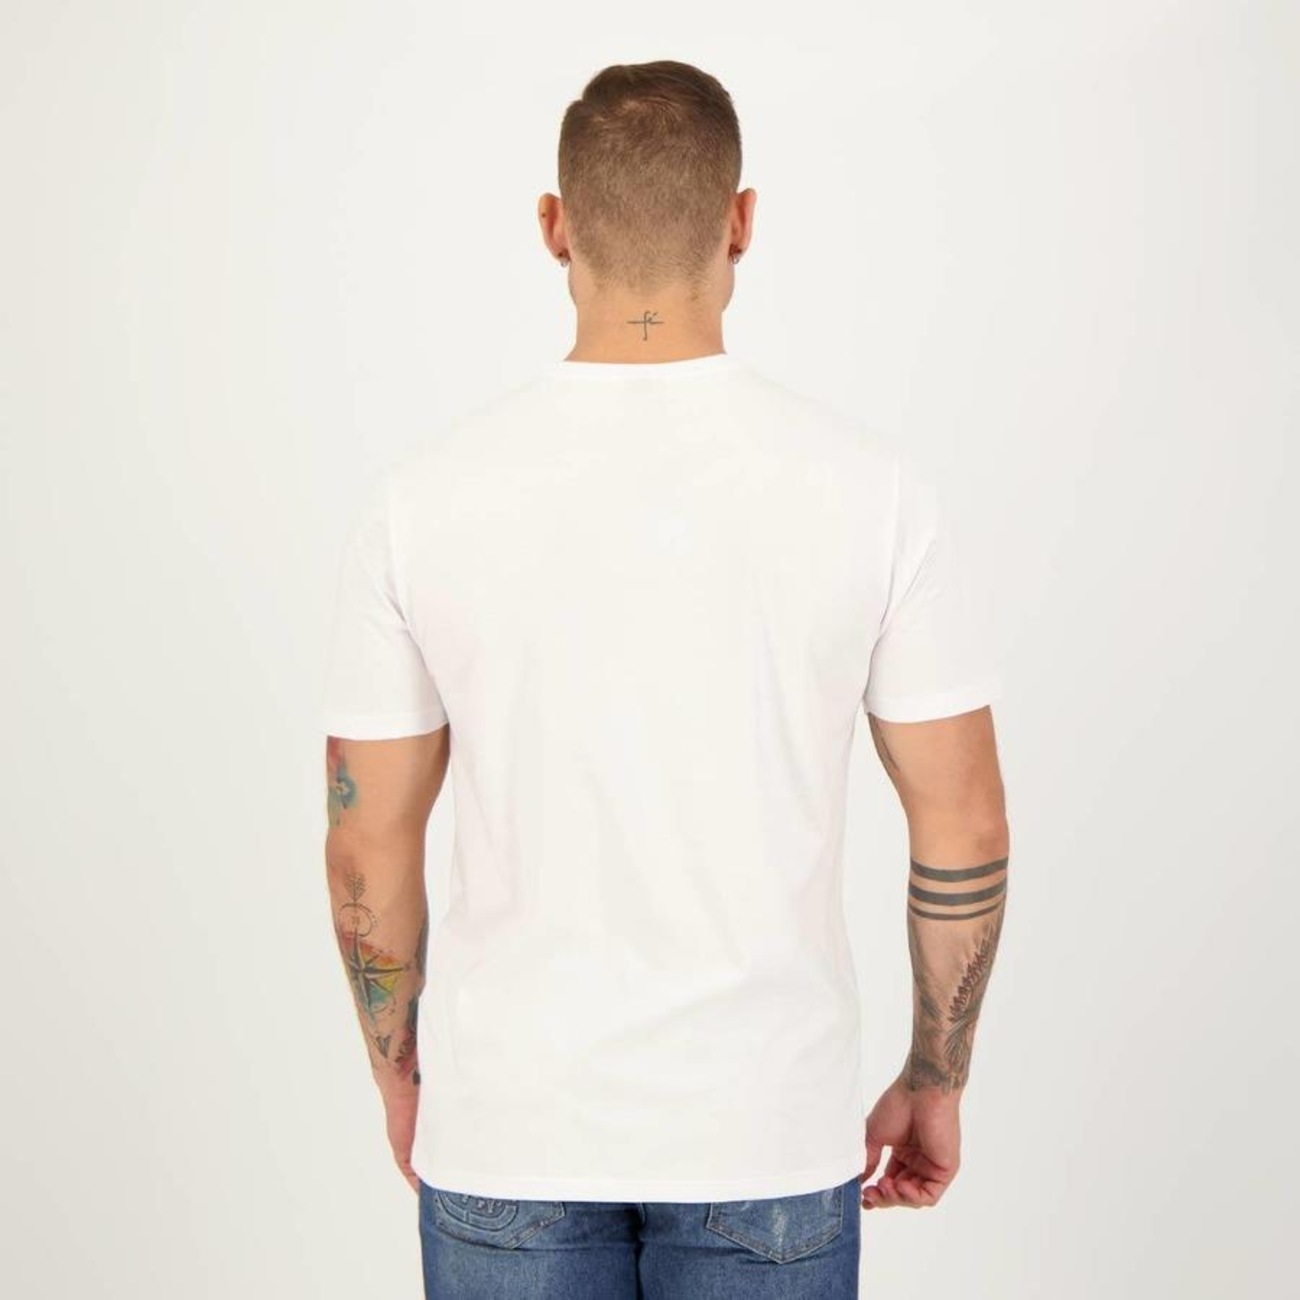 Compre Camiseta Masculina Oakley Iconic Tee Branca na Back Wash!